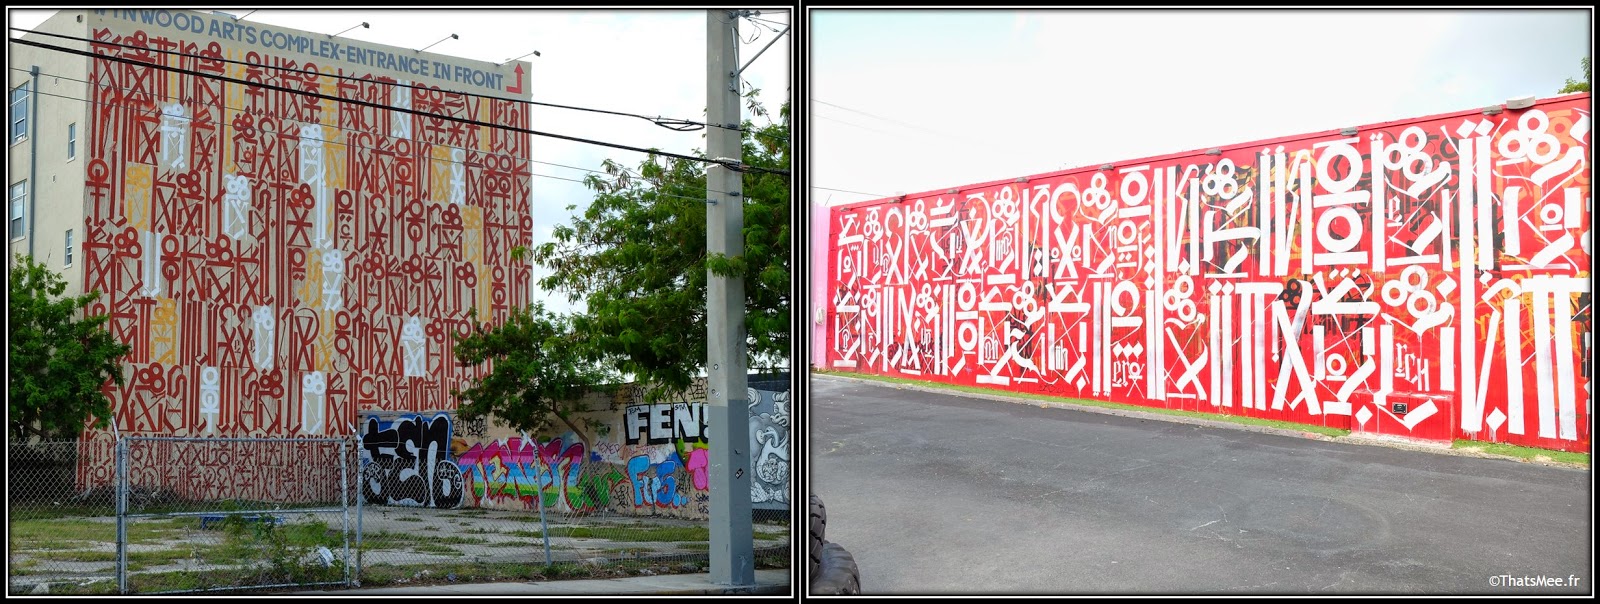 Miami Art Basel street artist Retna signes arabes Wynwood Walls Art District Miami